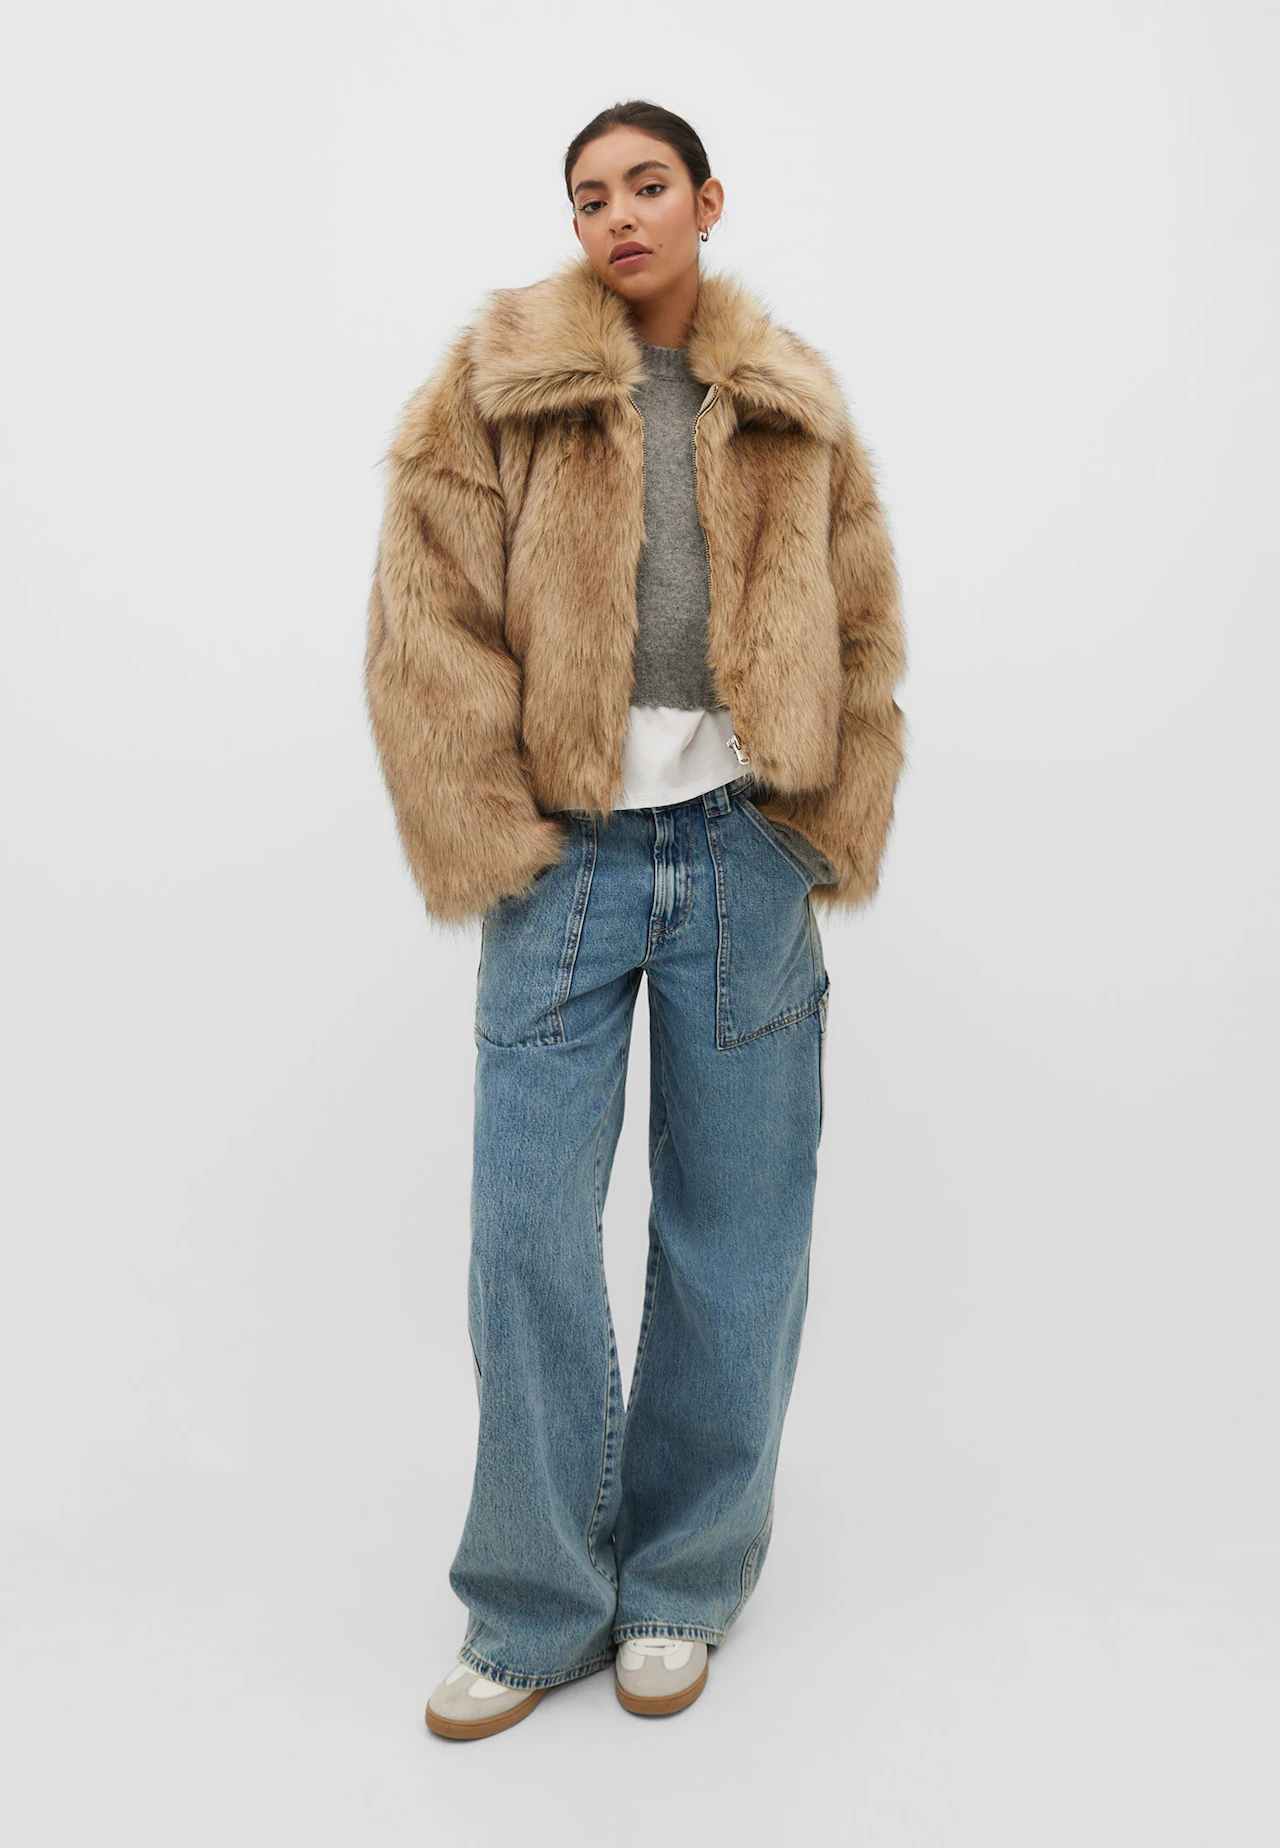 Faux fur vintage-style jacket - Women's fashion